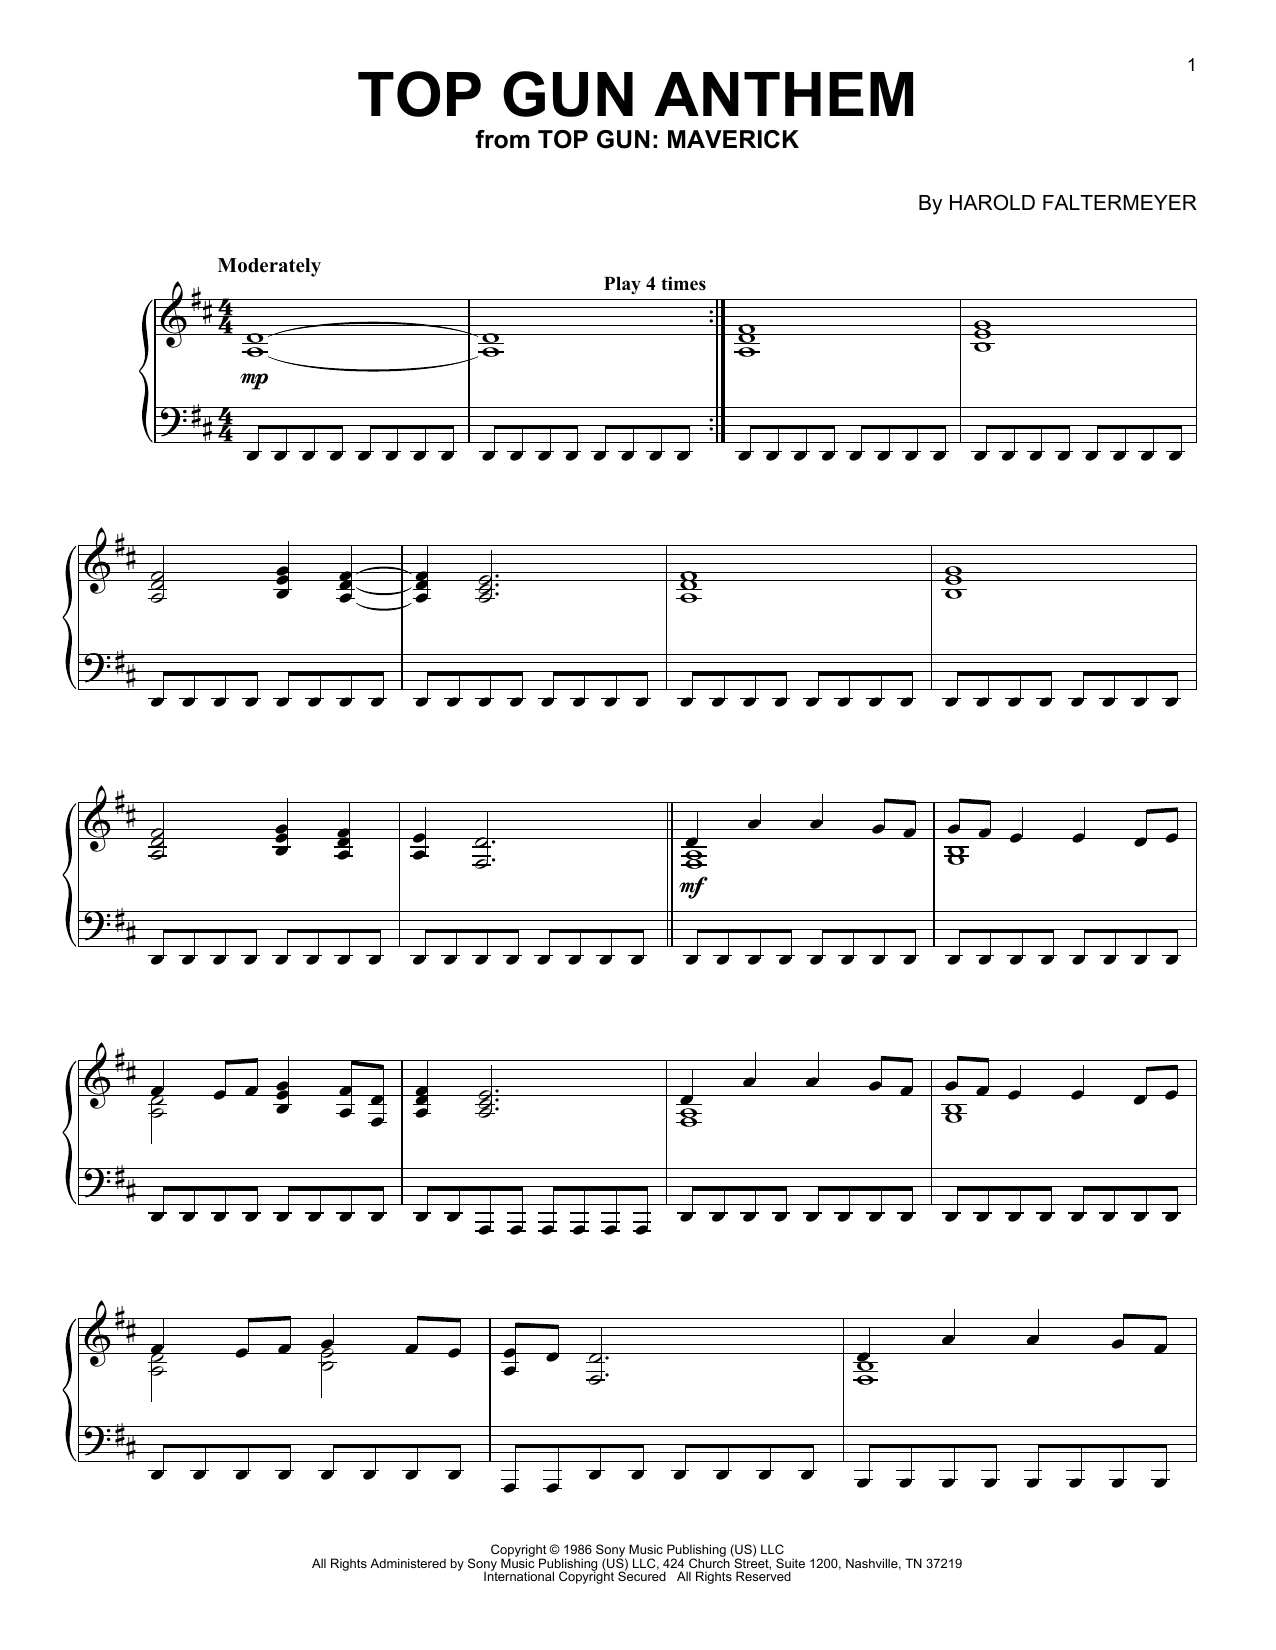 Harold Faltermeyer - Top Gun Anthem (The Intro) (2016 Composers Cut):  listen with lyrics